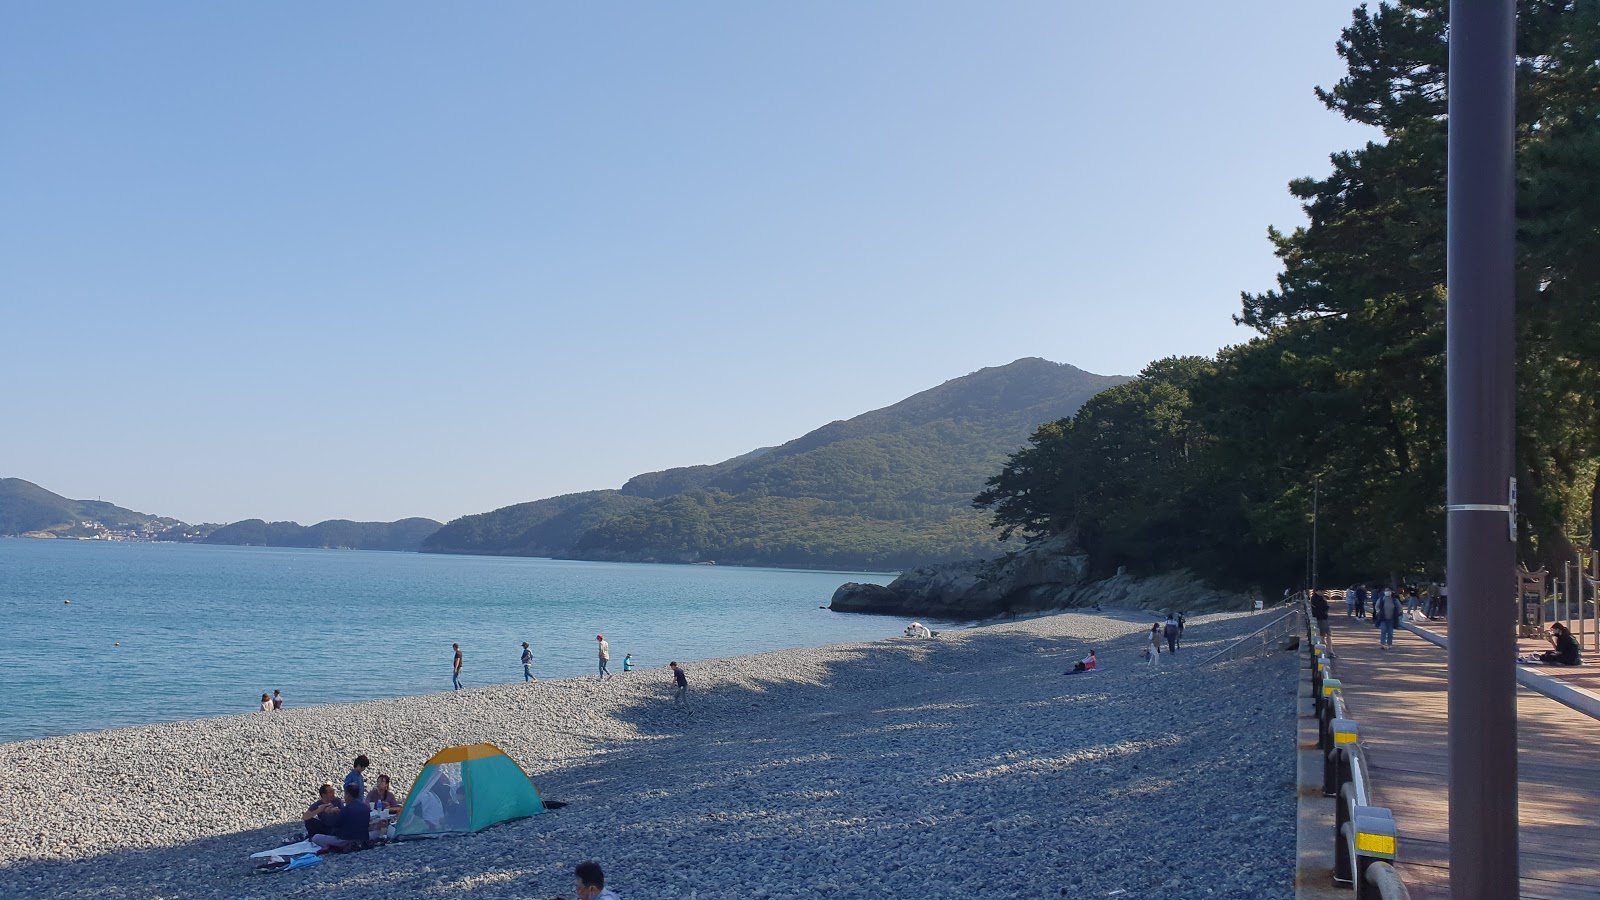 Foto de Yeocha Beach - lugar popular entre os apreciadores de relaxamento